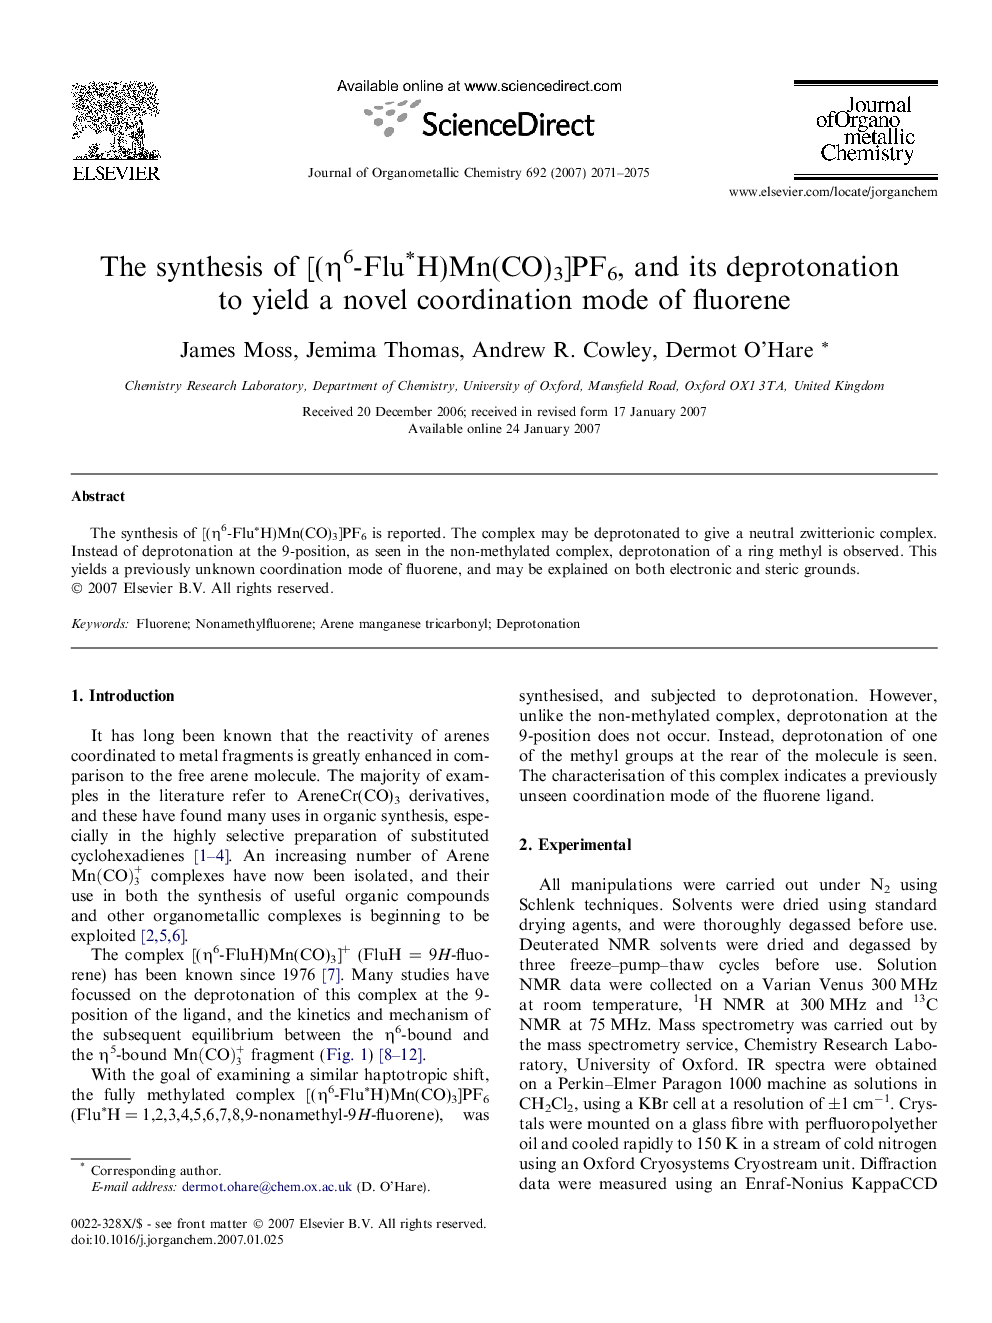 The synthesis of [(η6-Flu∗H)Mn(CO)3]PF6, and its deprotonation to yield a novel coordination mode of fluorene